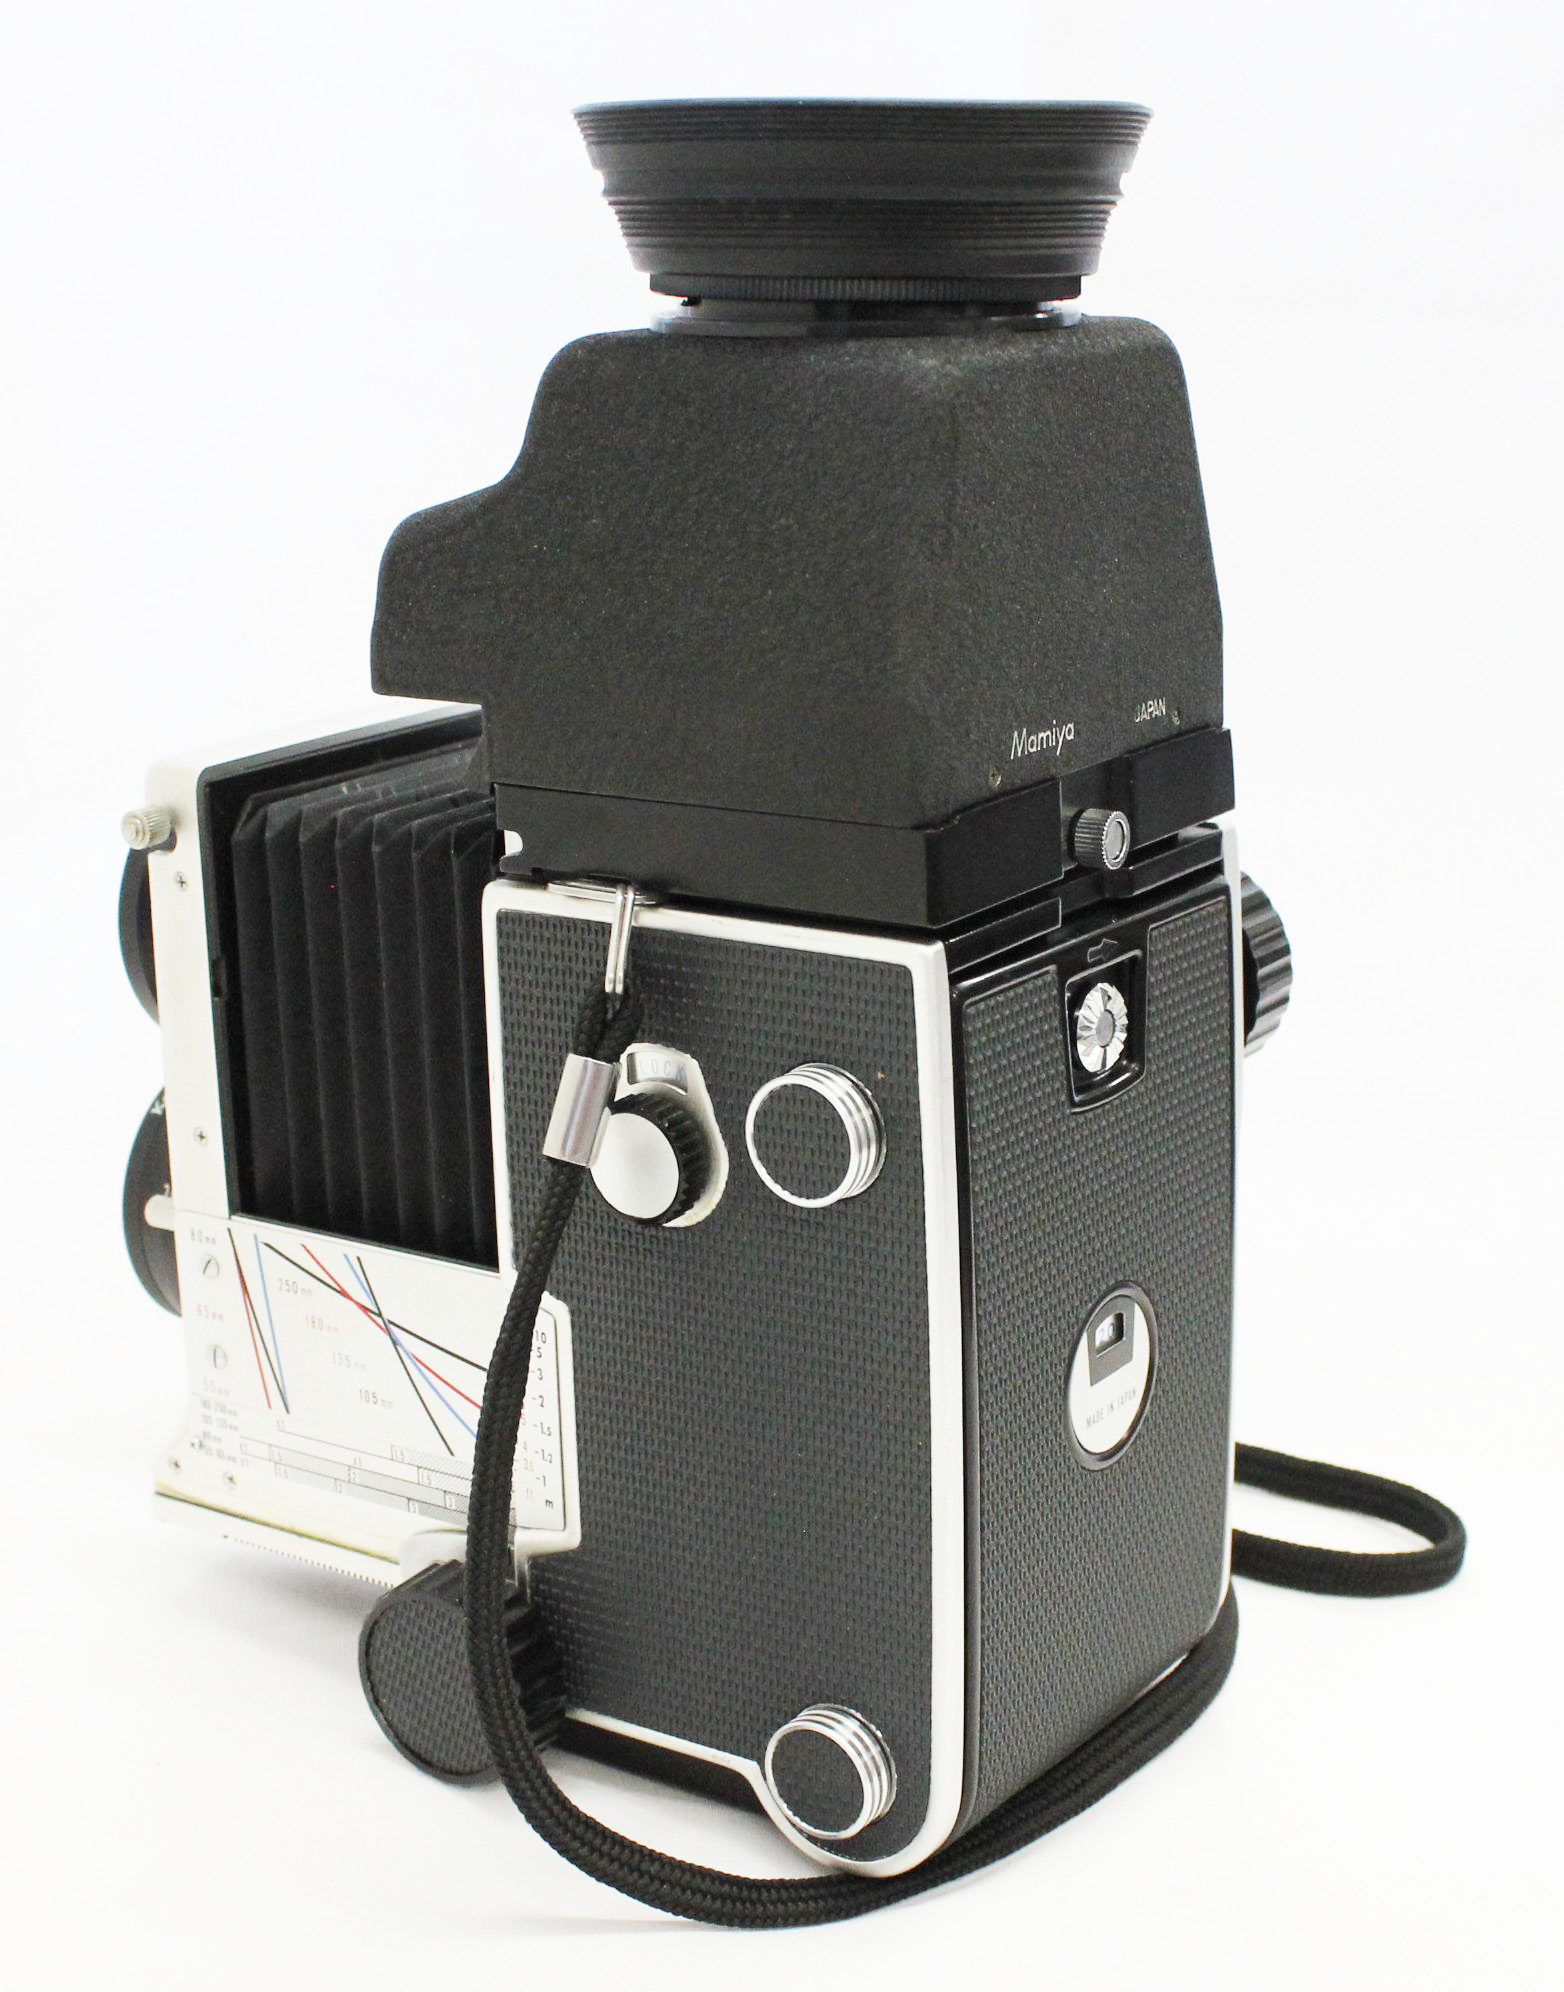  Mamiya C220 Pro TLR Medium Format Camera with 80mm F2.8 and CdS Magnifying Hood from Japan Photo 3